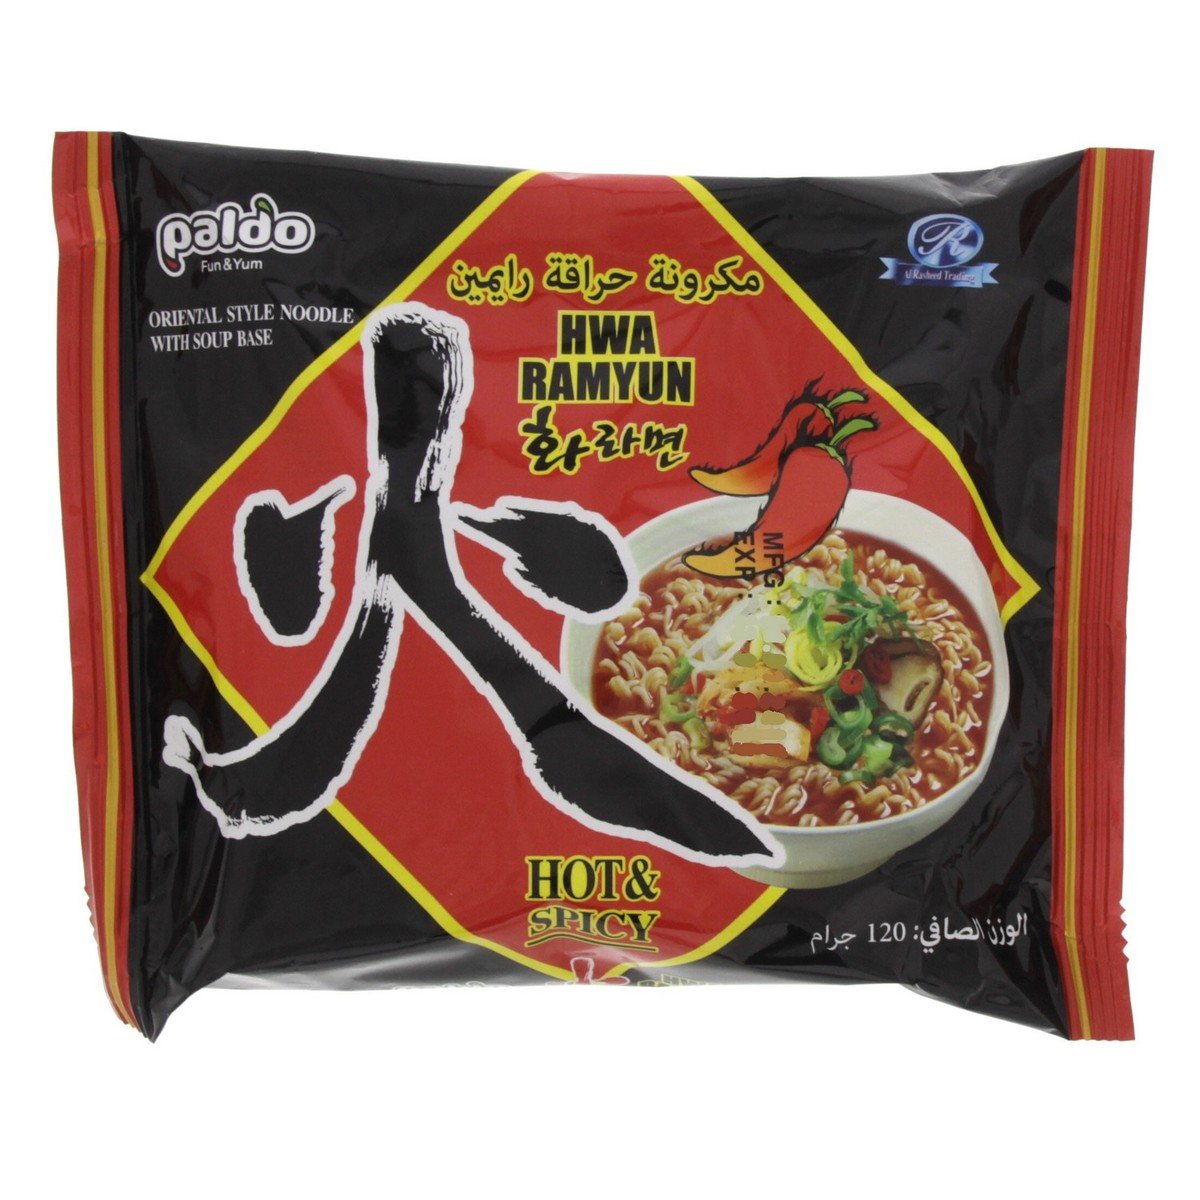 Paldo Hot & Spicy Hwa Ramyun Noodles 120 g